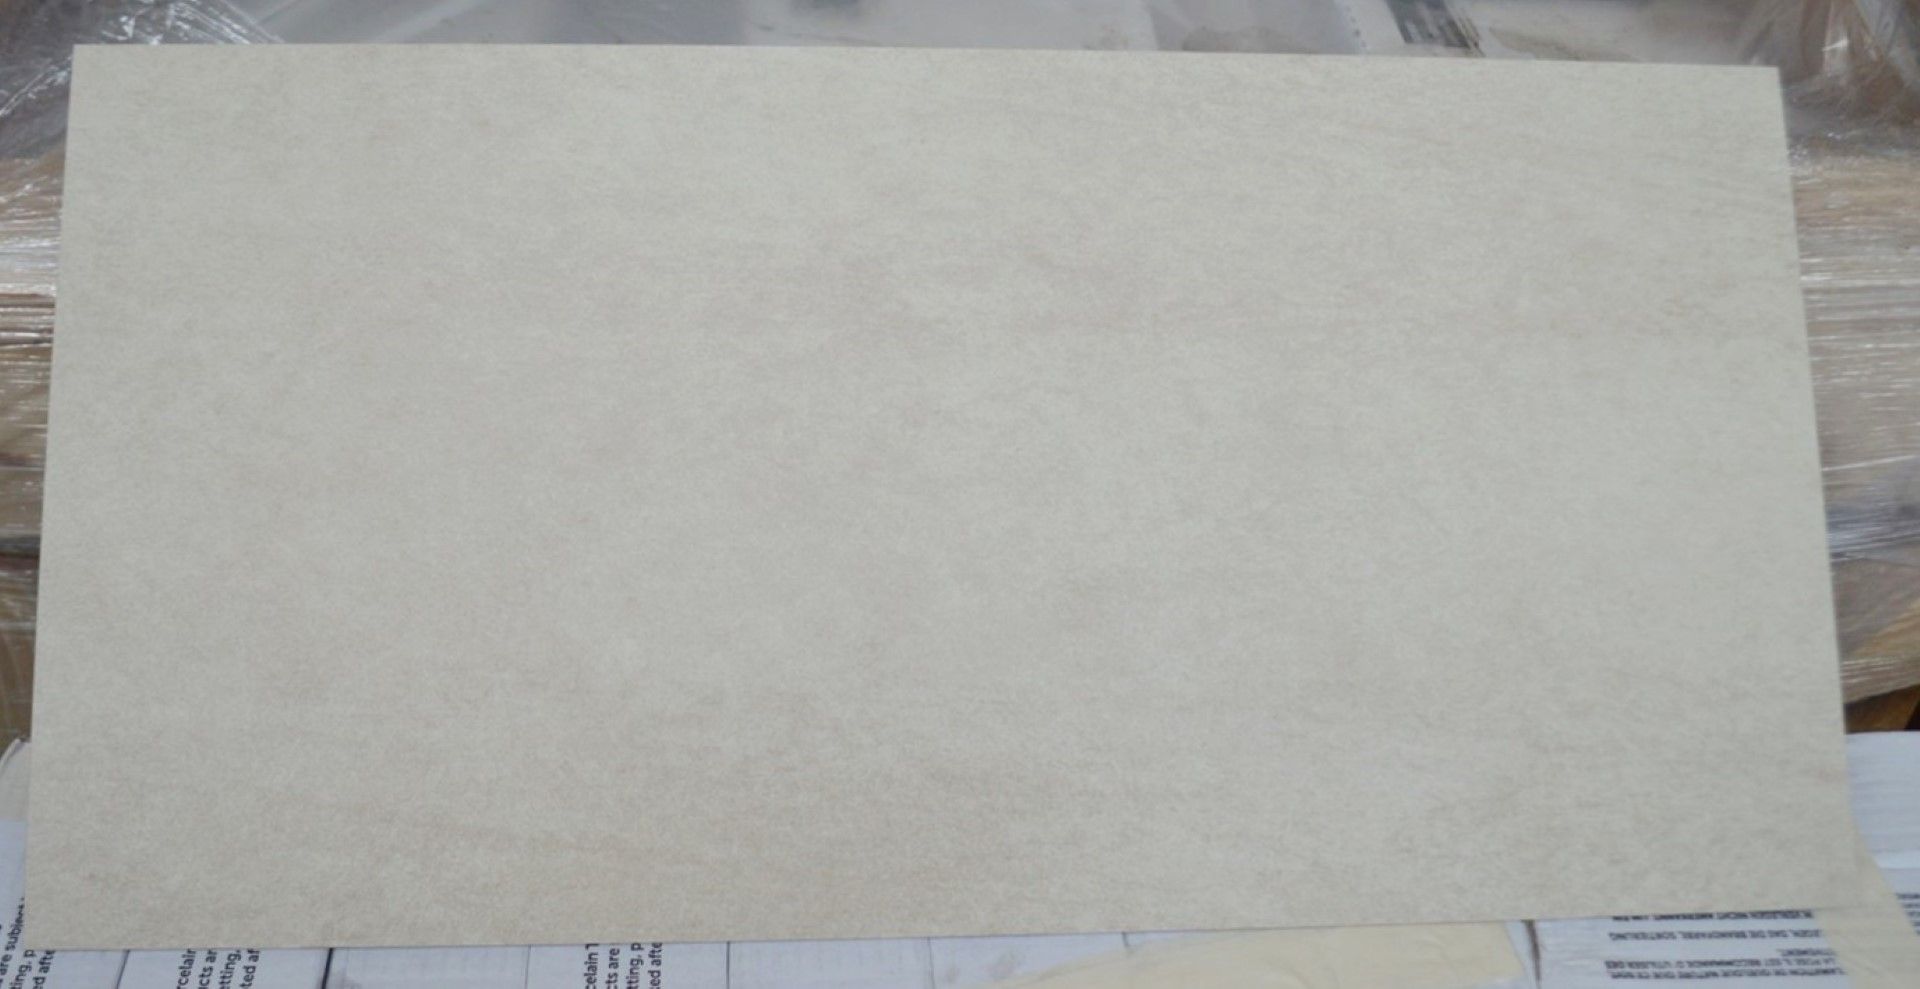 12 x Boxes of RAK Porcelain Floor or Wall Tiles - Concrete Rustic White Design - 30 x 60 cm Tiles - Image 3 of 8